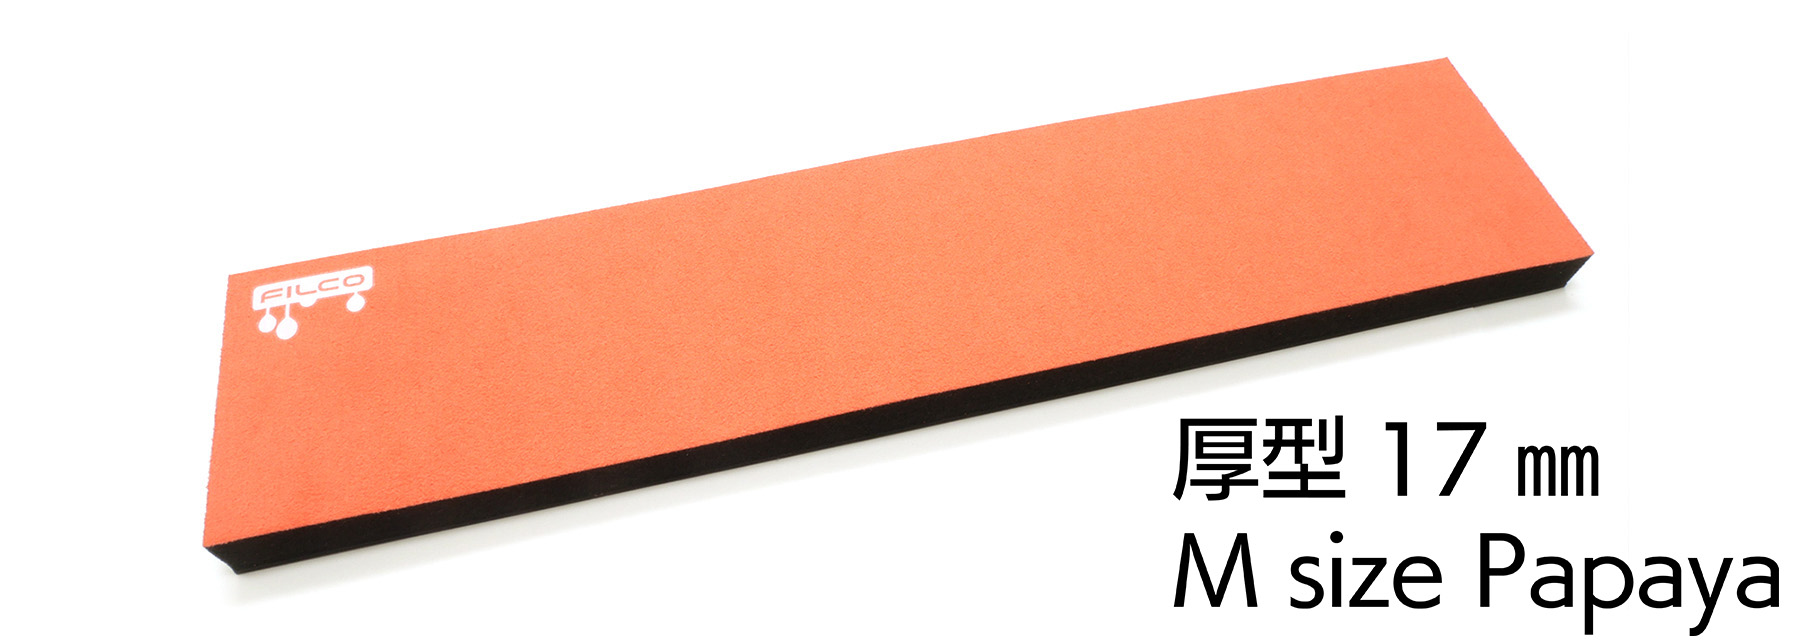 FILCO Majestouch Wrist Rest "Macaron" 厚型17mm・Mサイズ・Papaya【アウトレット品】